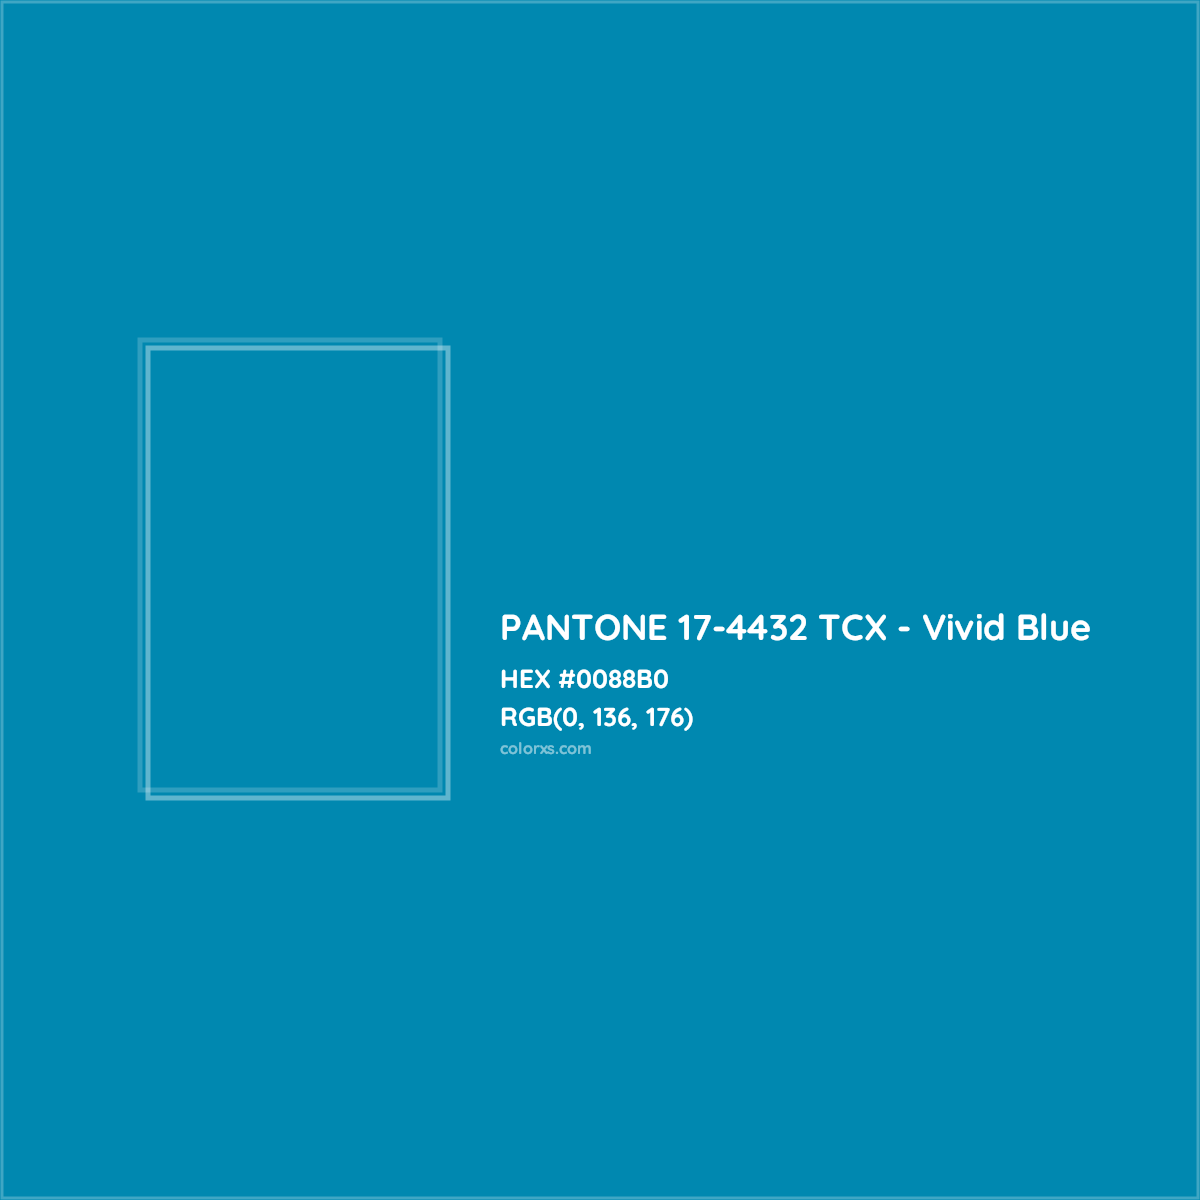 HEX #0088B0 PANTONE 17-4432 TCX - Vivid Blue CMS Pantone TCX - Color Code